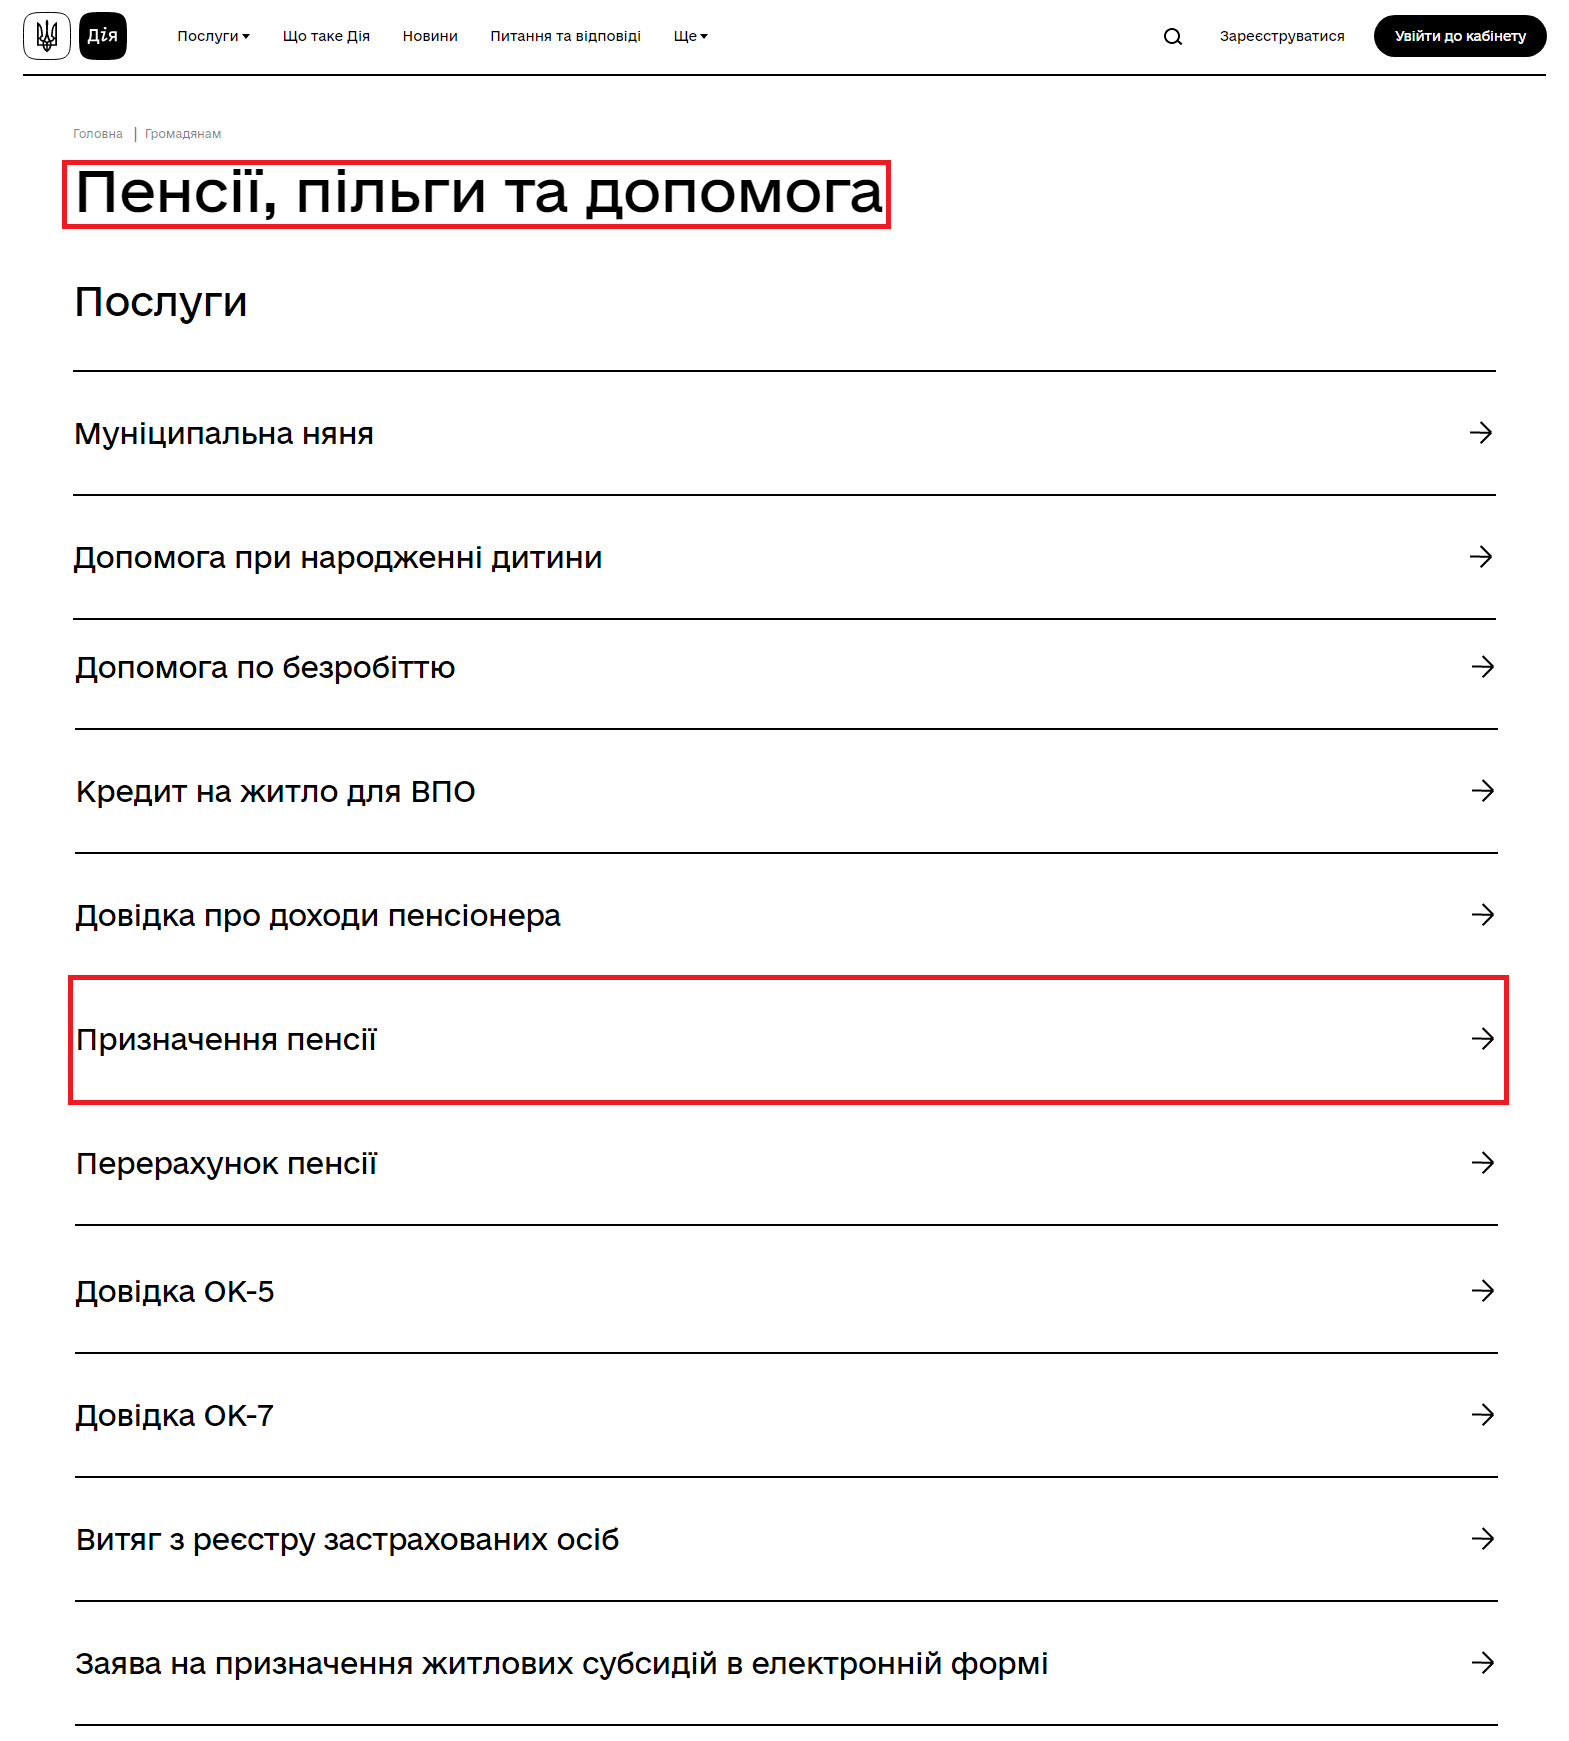 https://diia.gov.ua/services/categories/gromadyanam/pensiyi-pilgi-ta-dopomoga